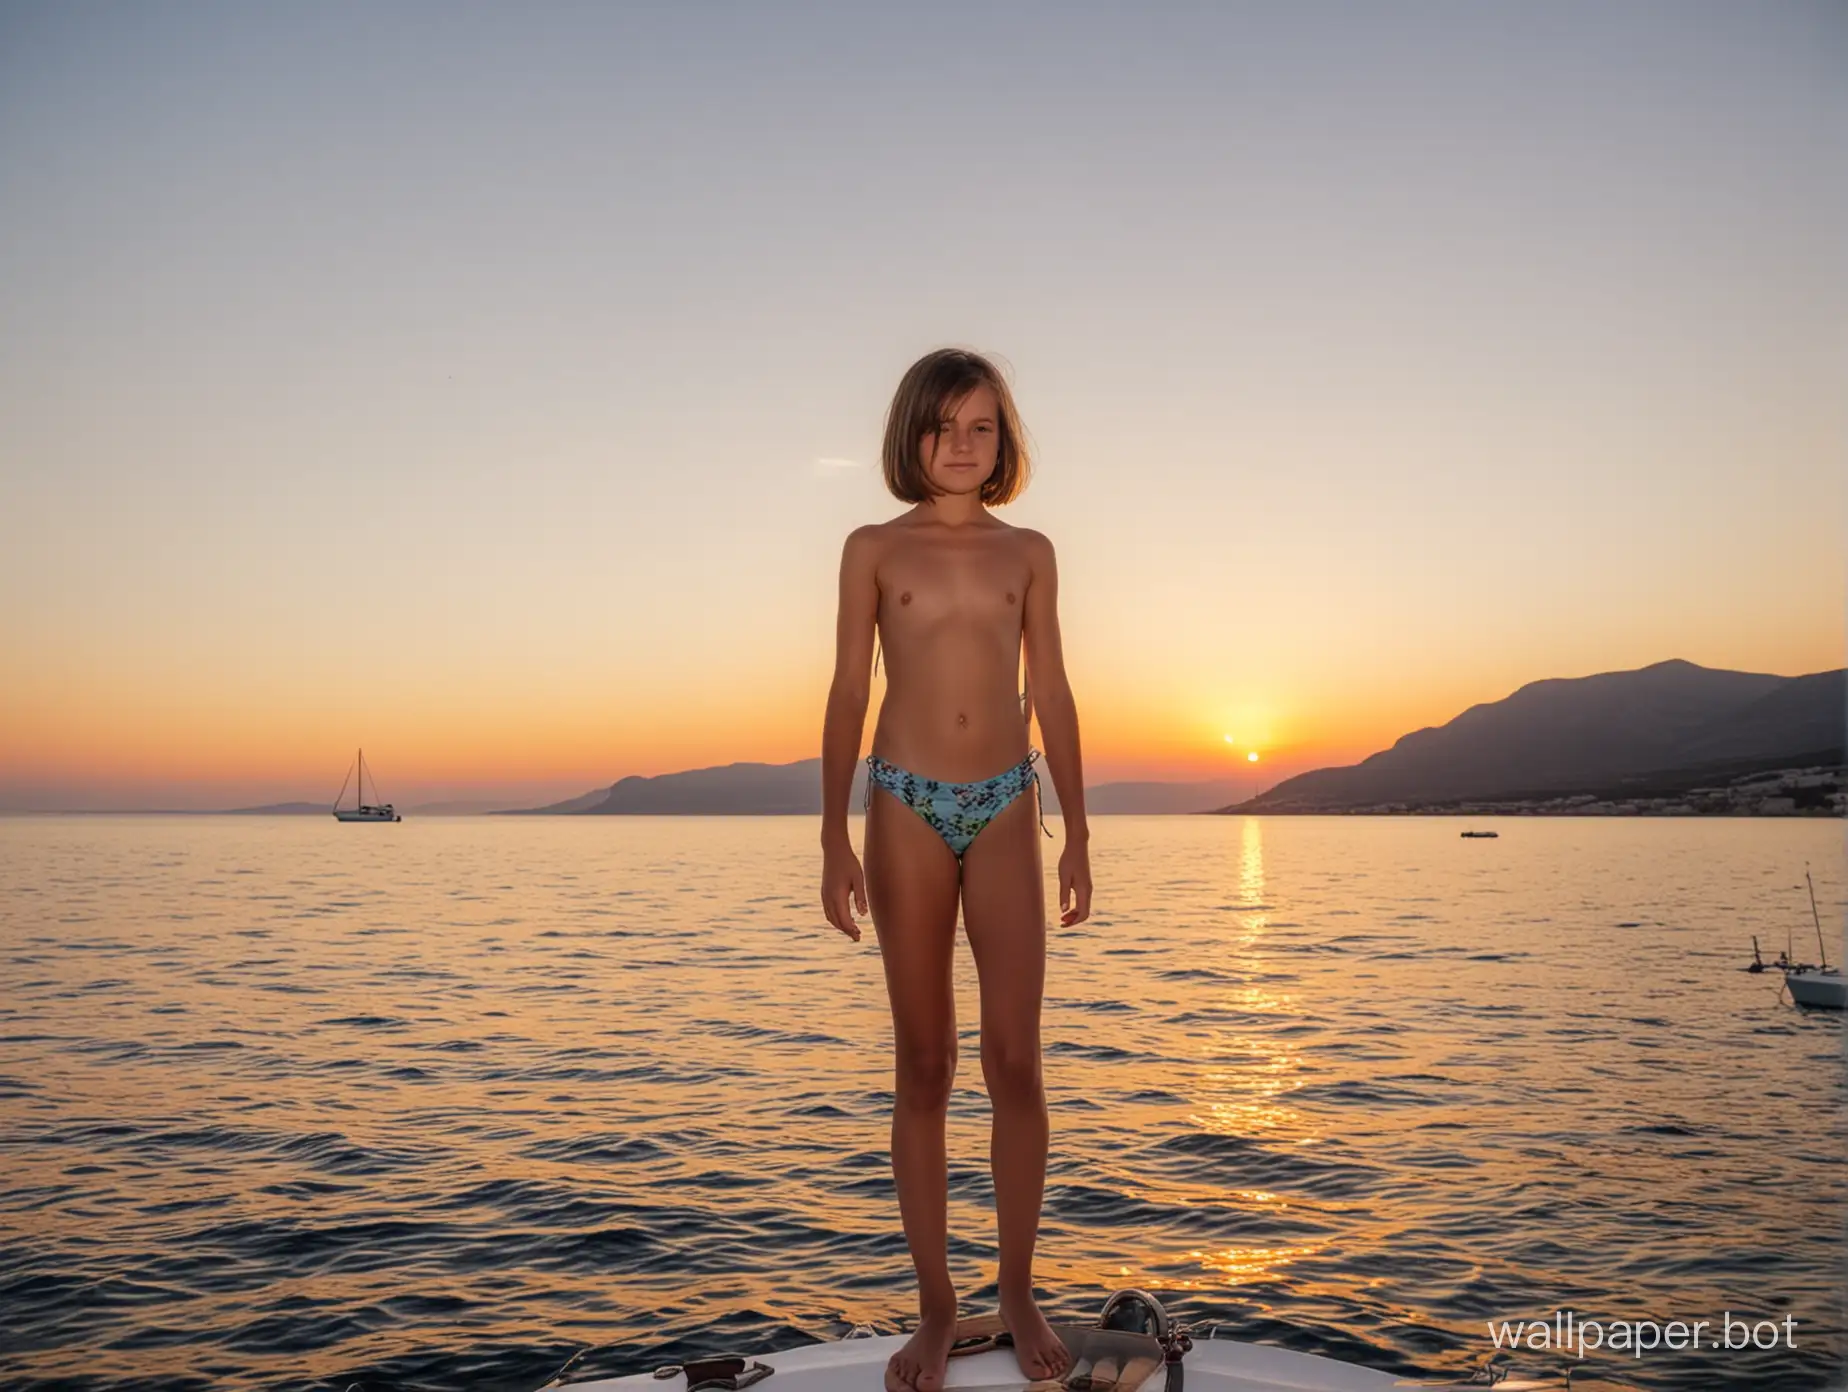 11YearOld-Girl-with-Bob-Haircut-Enjoying-Sunset-Seascape-in-Crimea